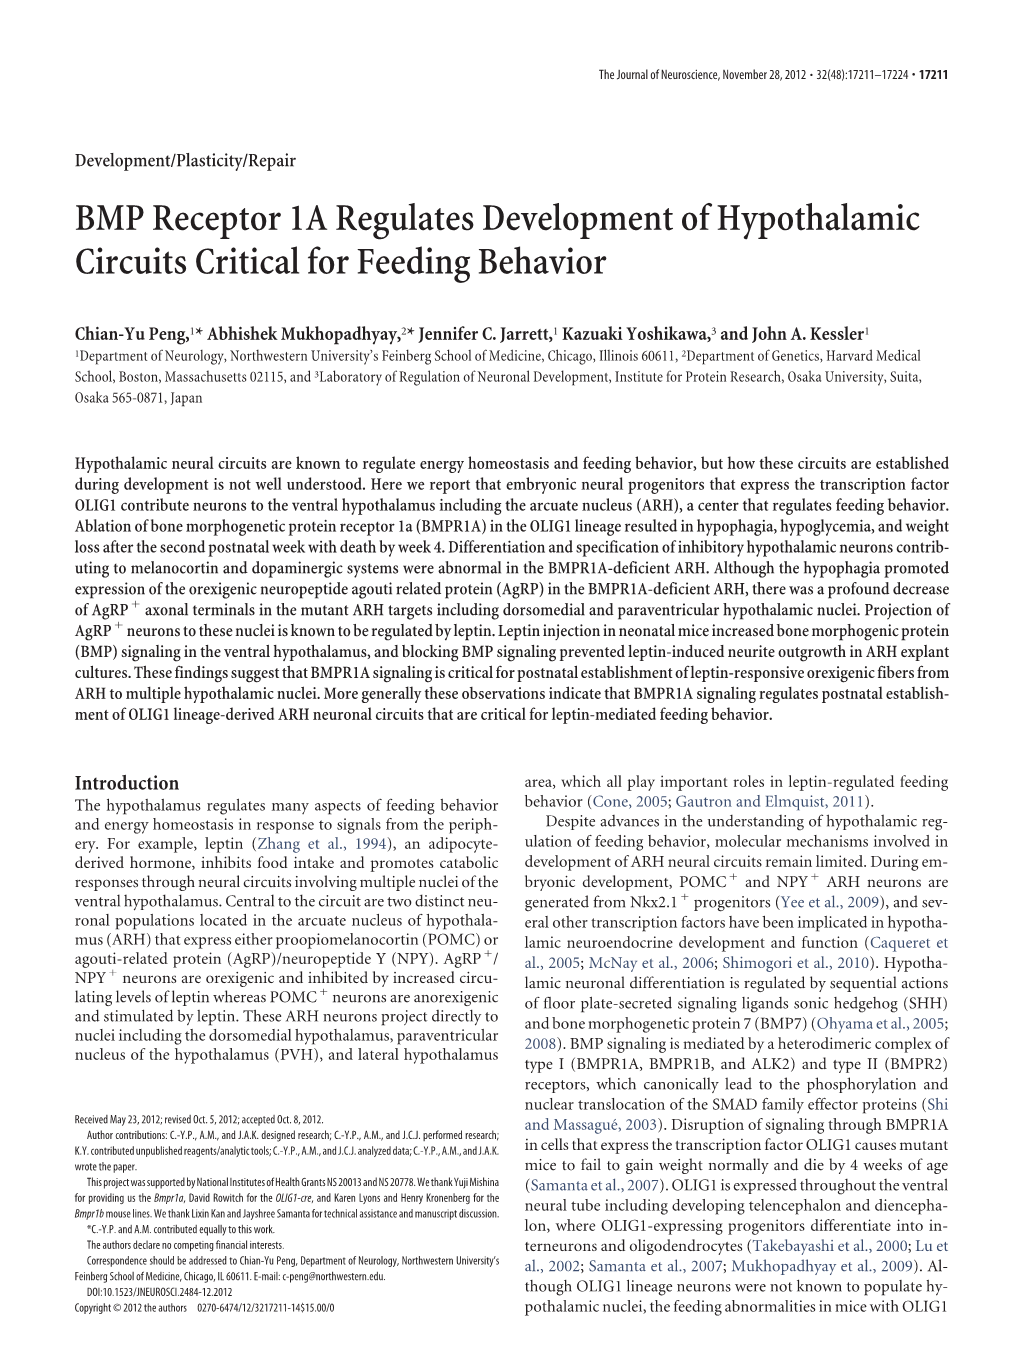 BMP Receptor 1A Regulates Development of Hypothalamic Circuits Critical for Feeding Behavior